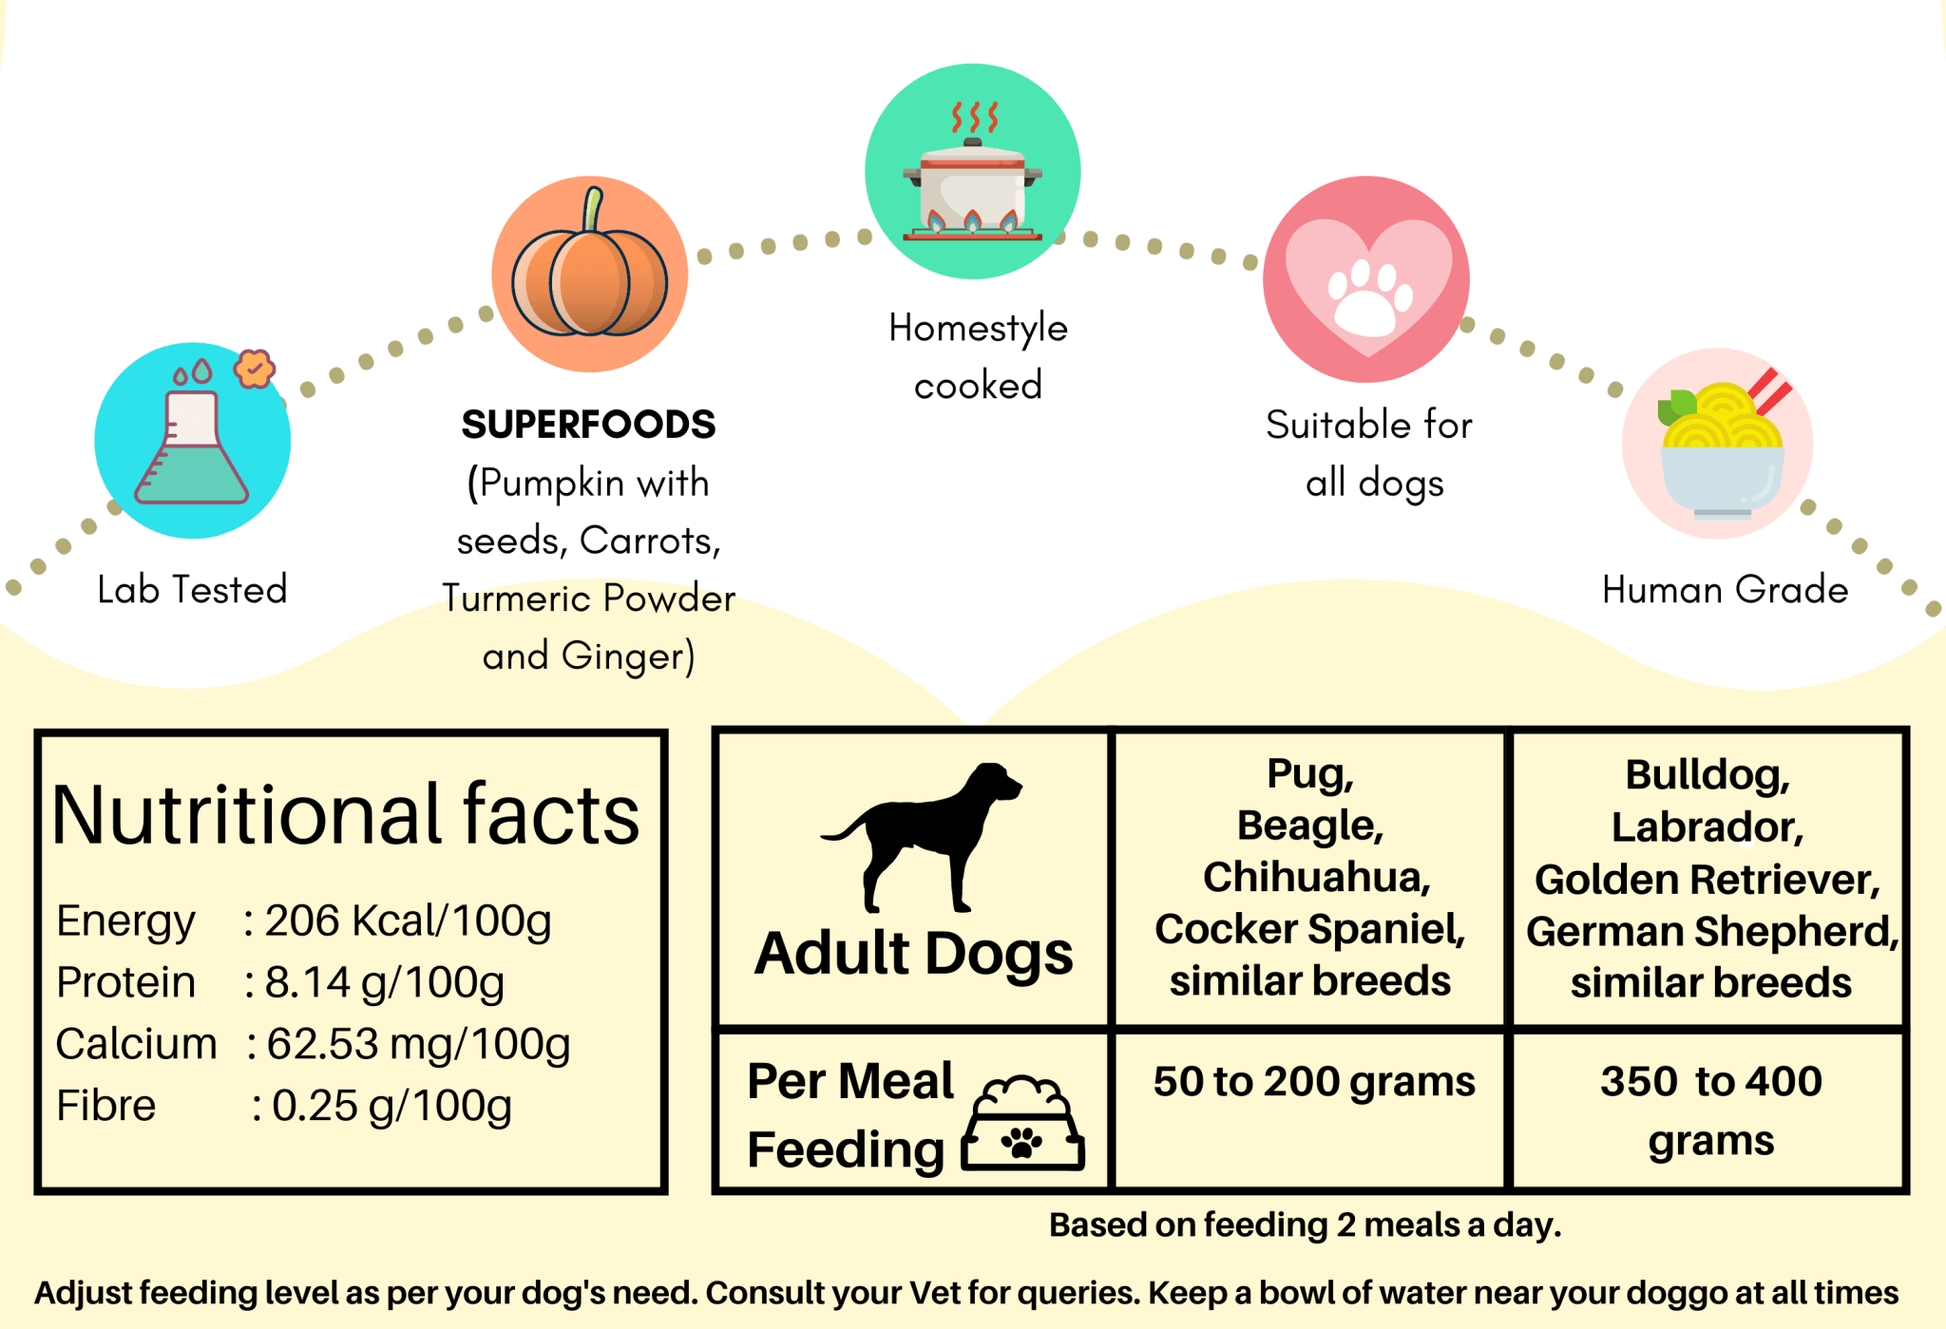 Doggos Mini Jumbo Monster - Wagr - The Smart Petcare Platform